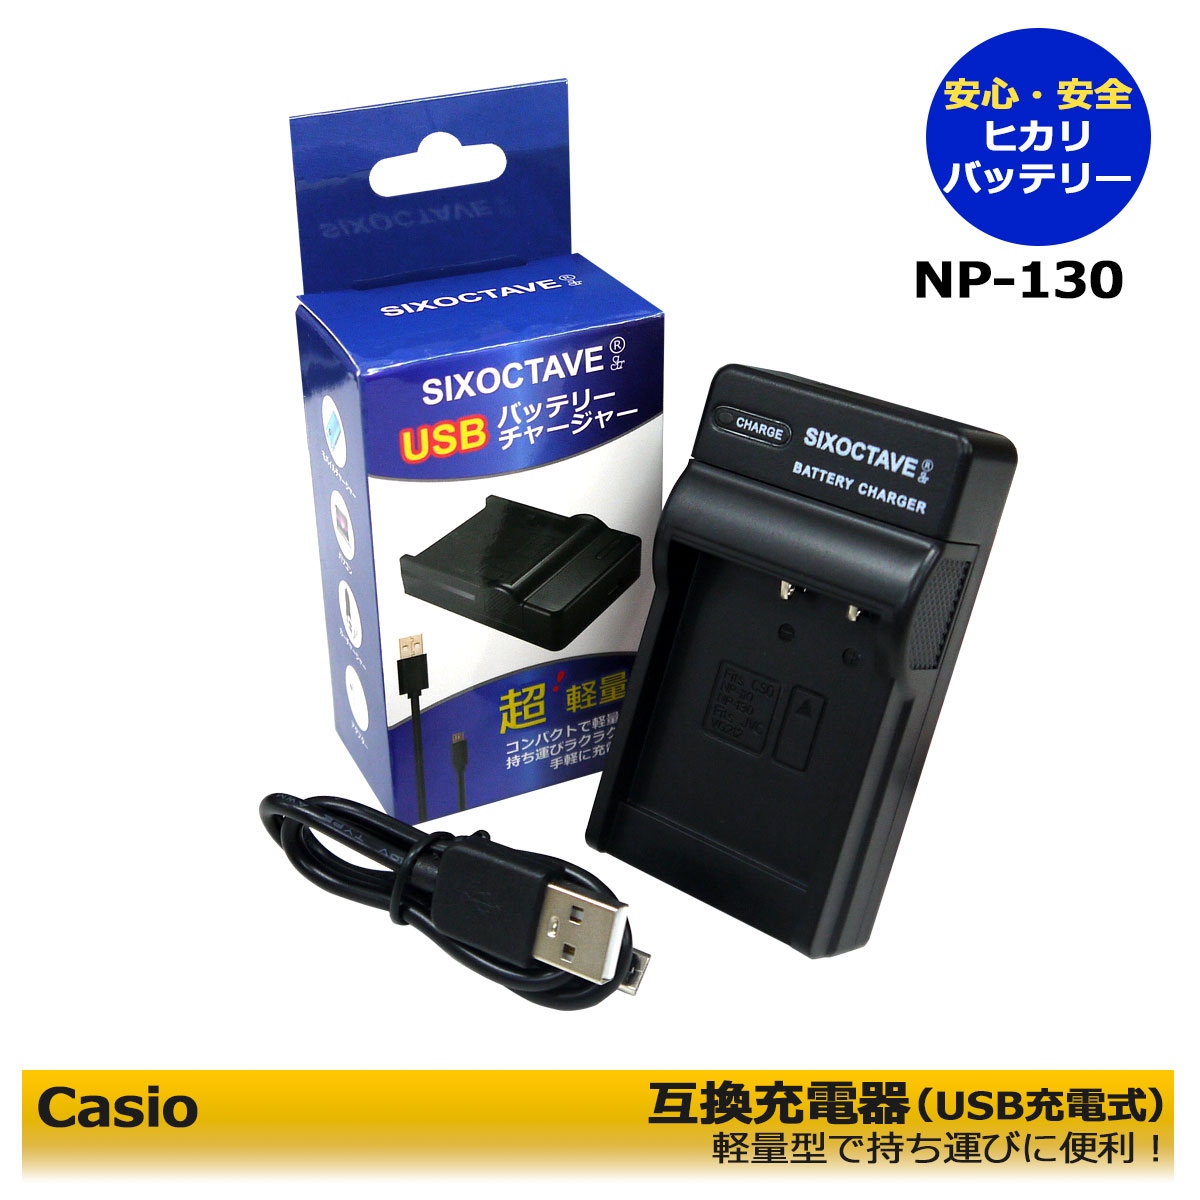 EXILIM Casio NP-130 NP-110 NP-160 USB互換充電器 1点 CASIO Exilim EX-10 / EX-10BE / EX-100 / EX-100F / EX-100PRO / EX-H30 / EX-H35 / EX-SC100 / EX-SC200 / EX-FC300S / EX-FC400 / EX-FC400S / Exilim Zoom EX-Z2000 / Exilim Zoom EX-Z2300